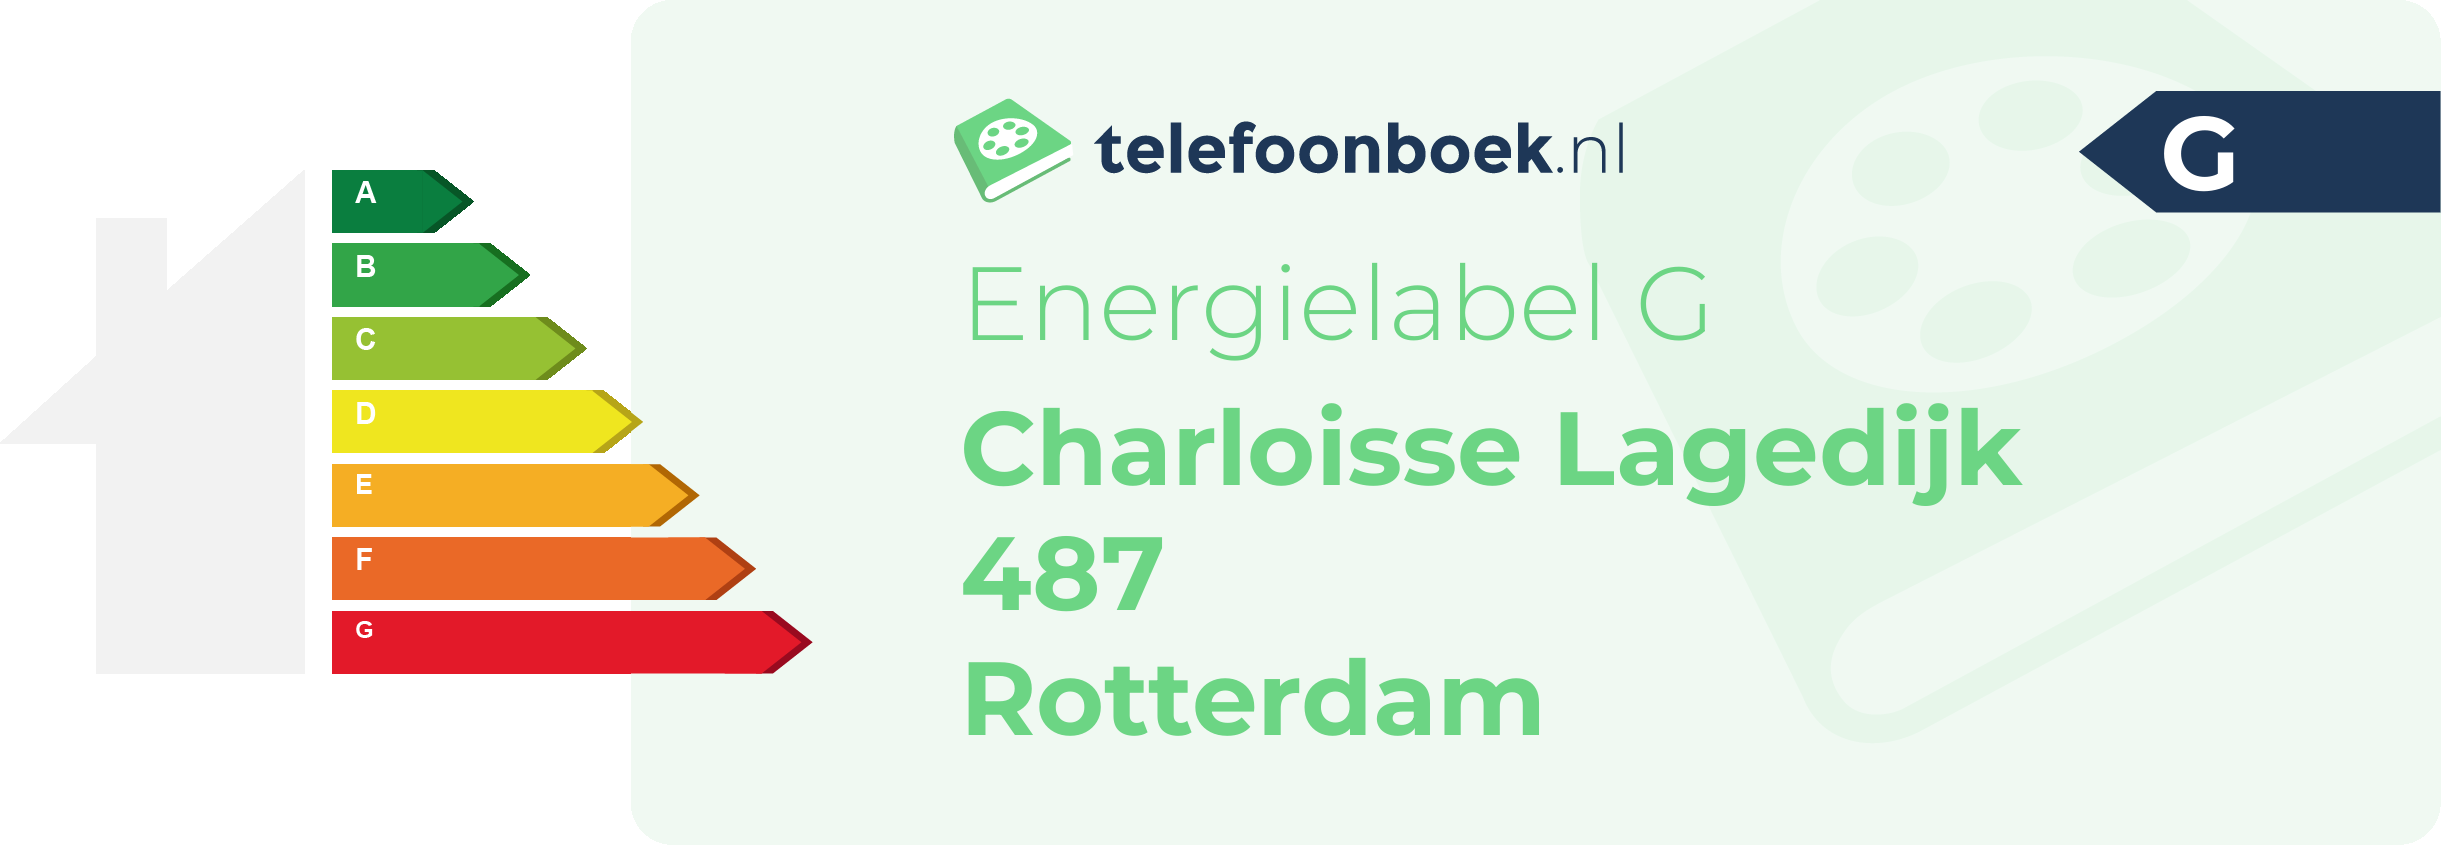 Energielabel Charloisse Lagedijk 487 Rotterdam